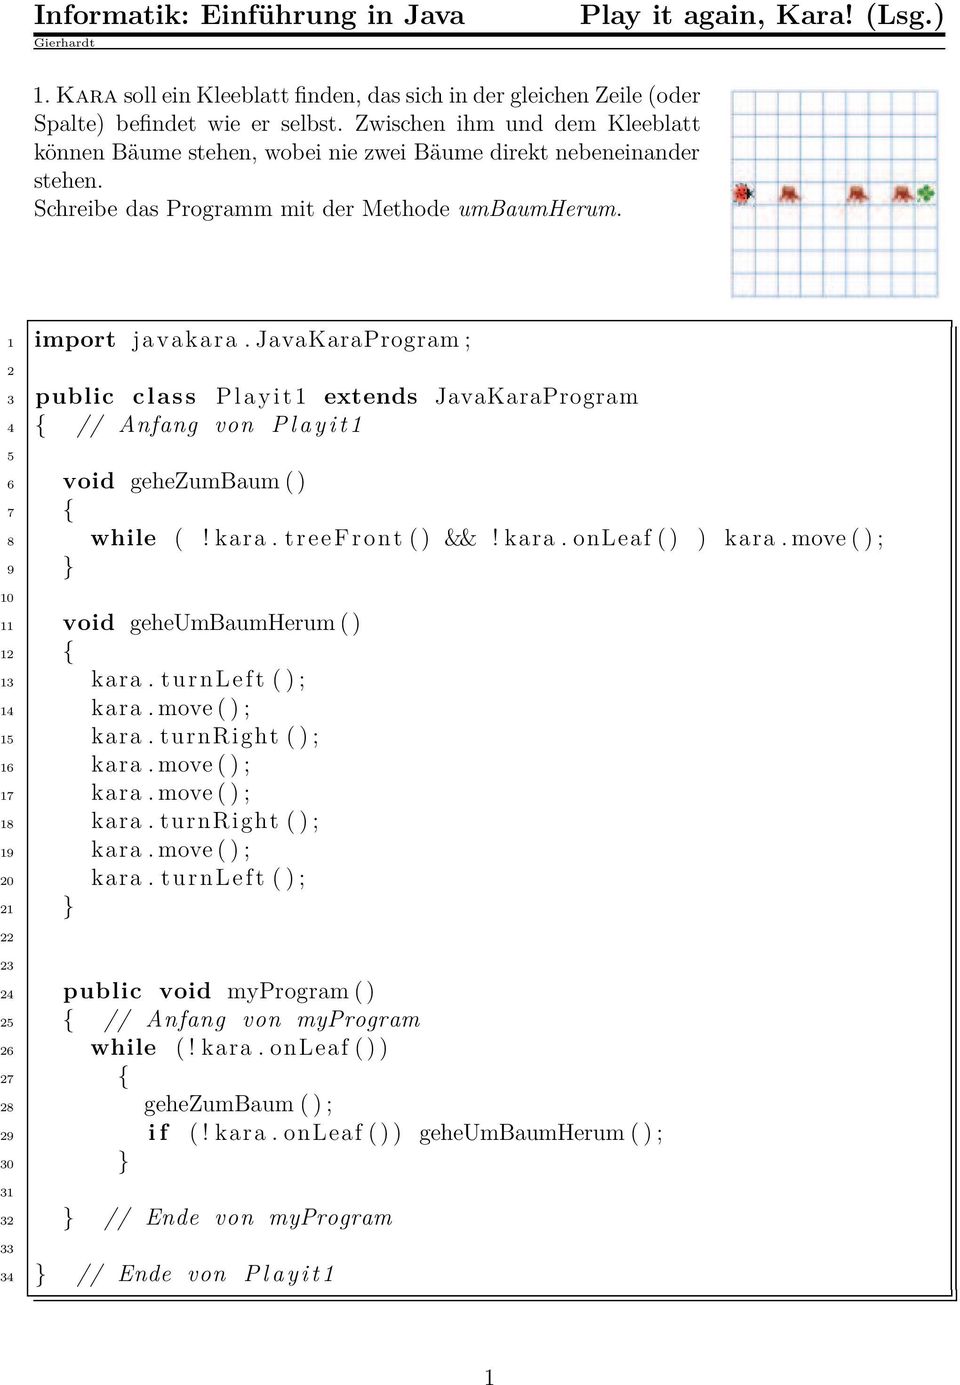 3 public class Playit1 extends JavaKaraProgram 4 { // Anfang von Playit1 6 void gehezumbaum ( ) 7 { 8 while (! kara. treefront ( ) &&! kara. onleaf ( ) ) kara.